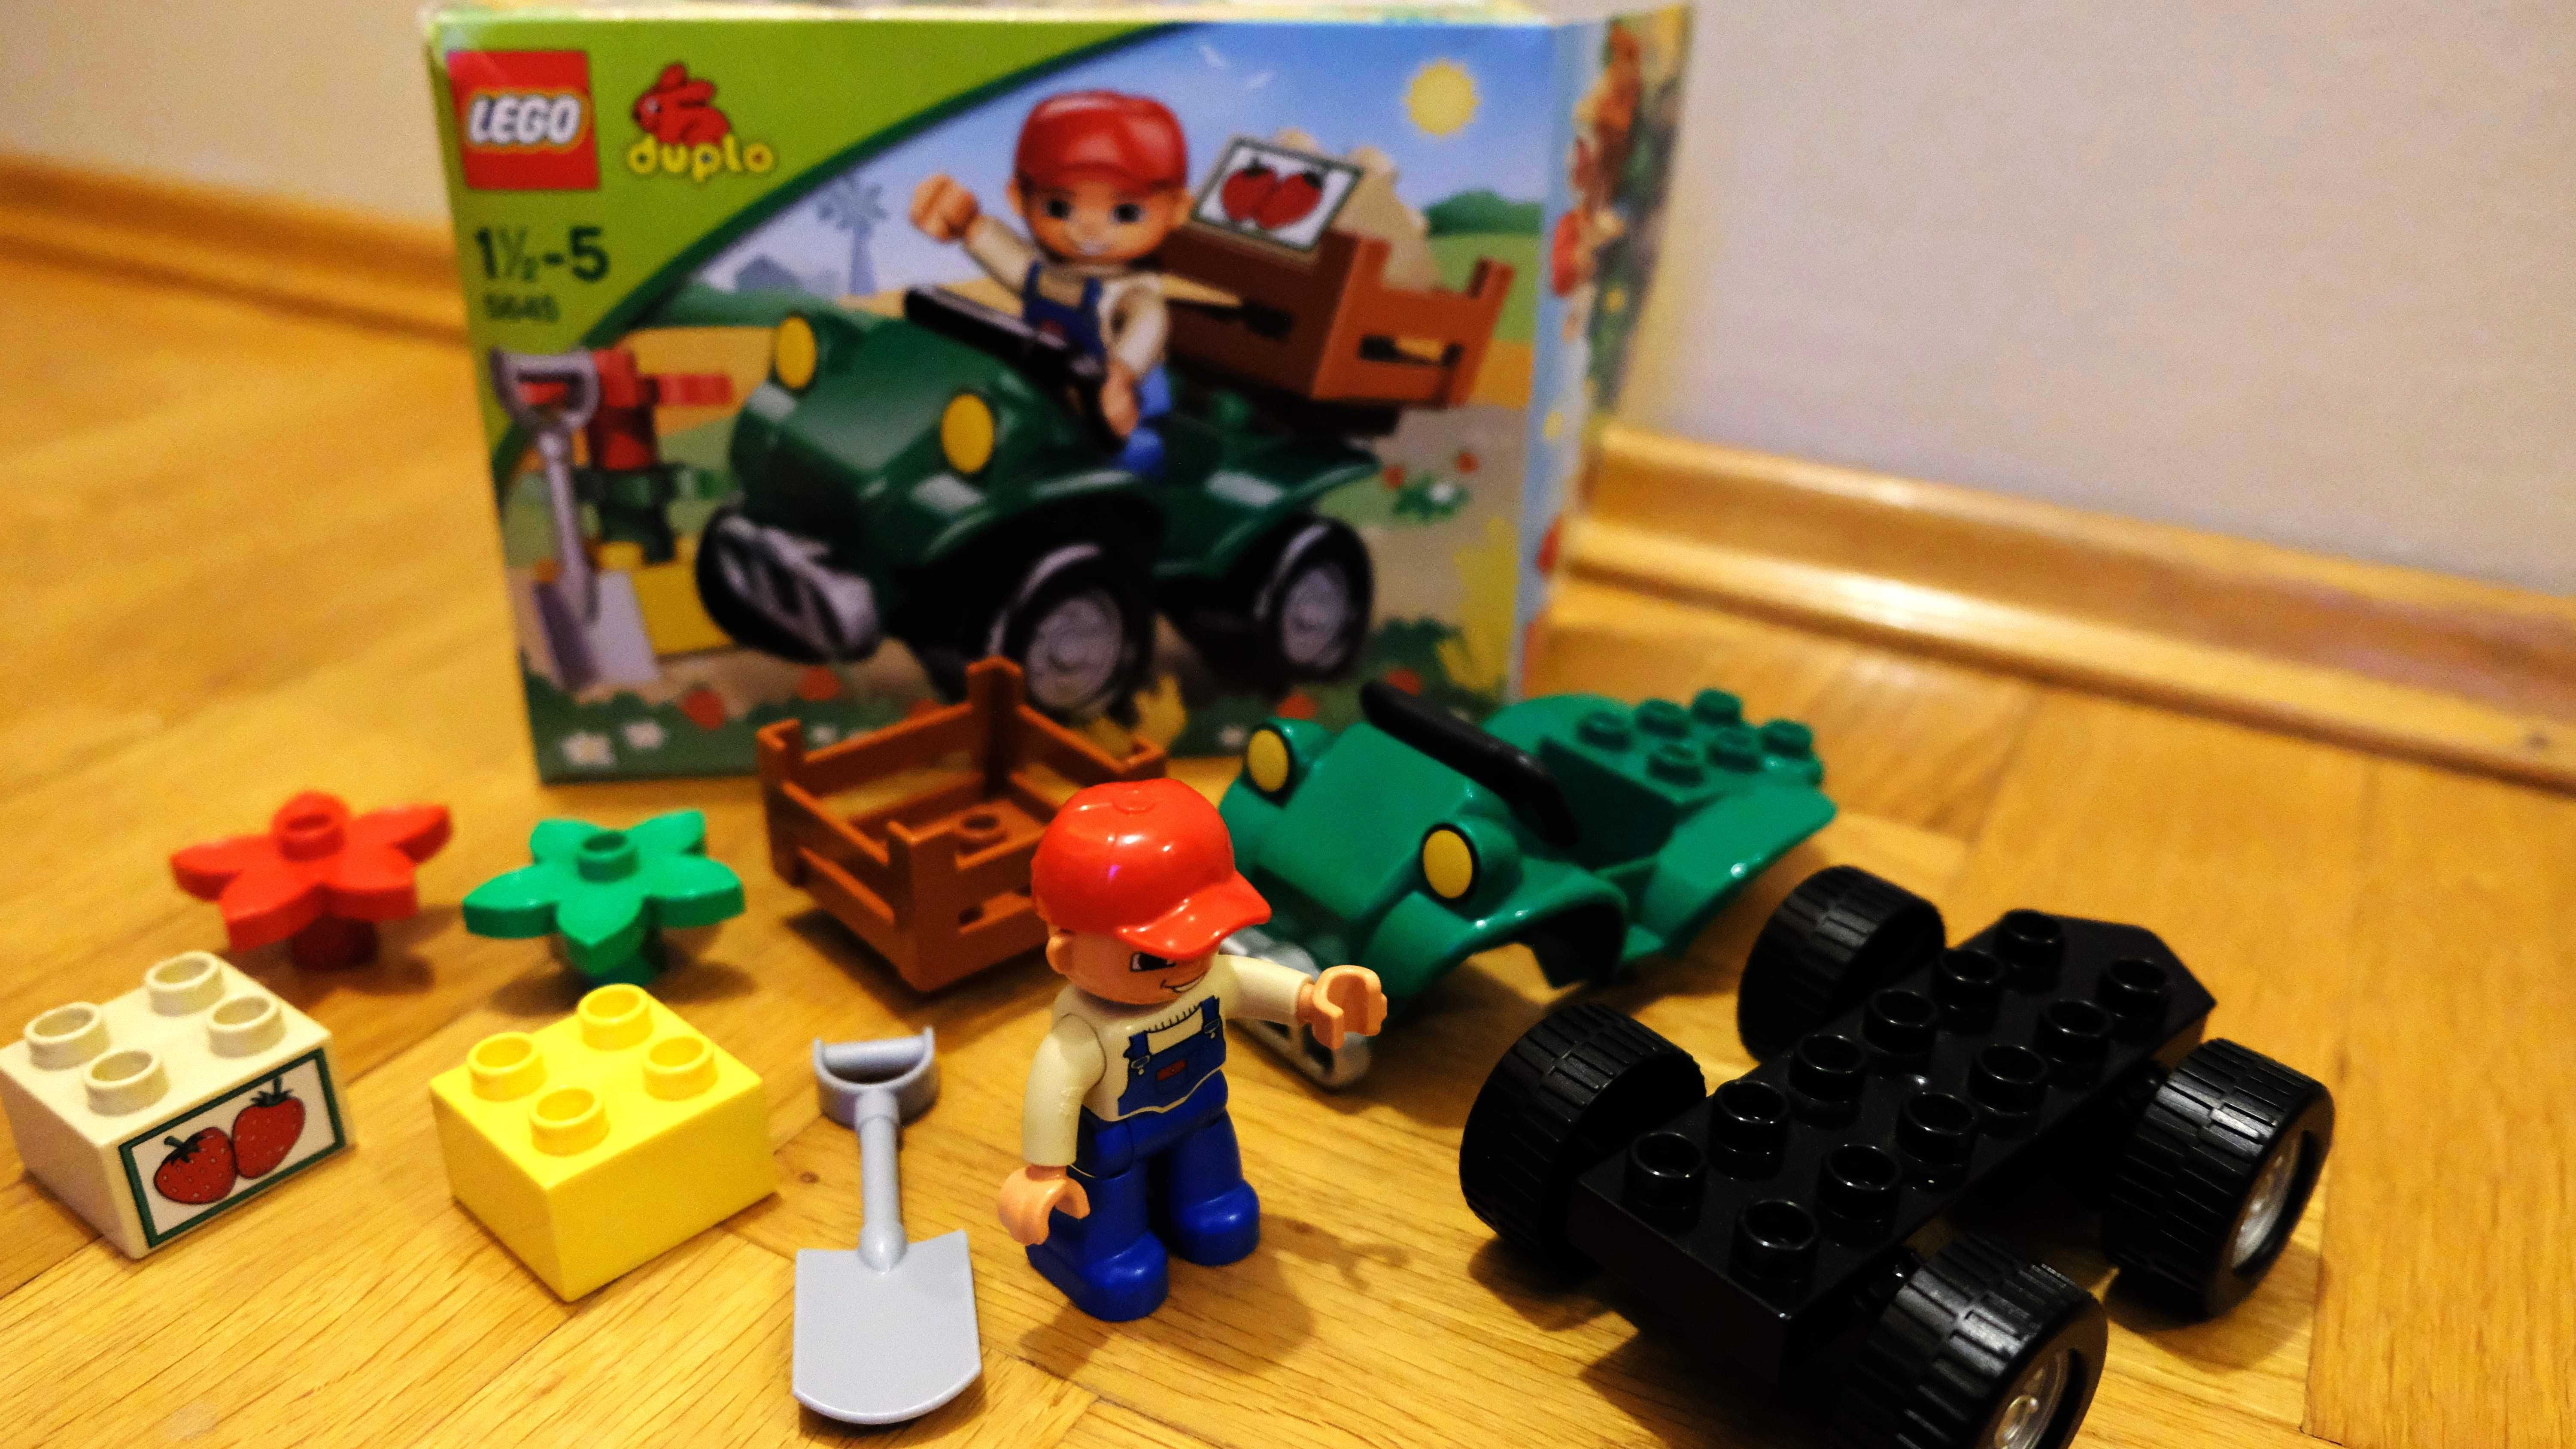 LEGO DUPLO - Quad farmera (nr 5645)